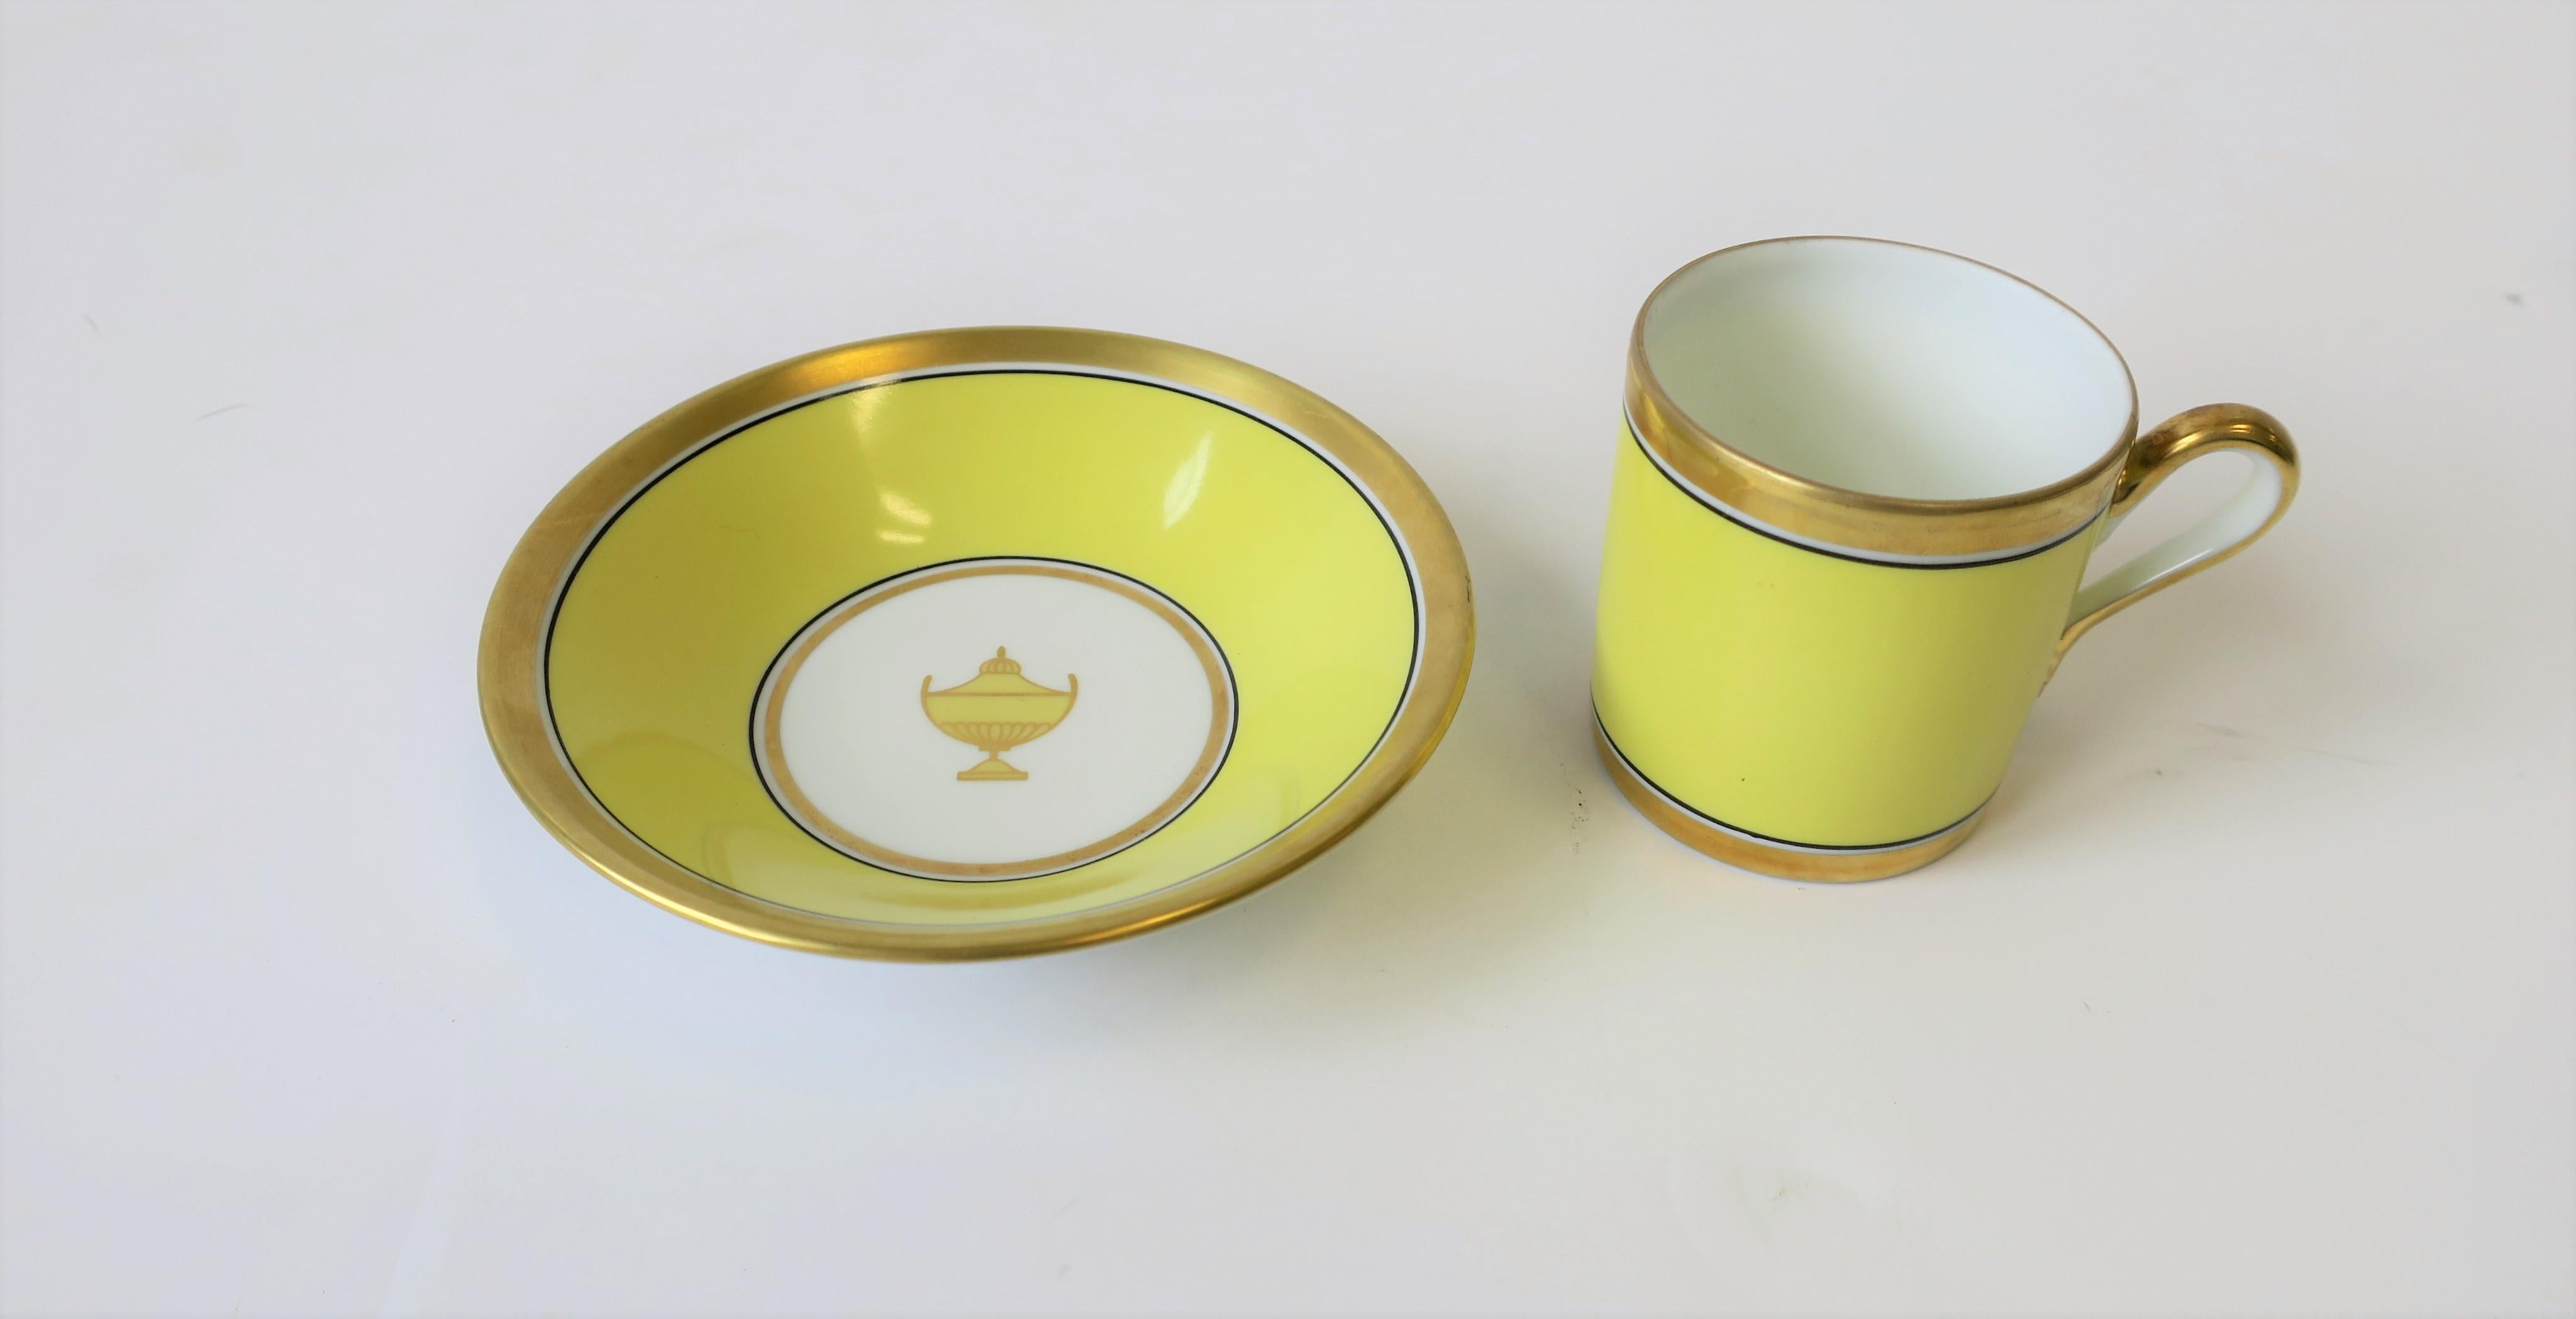 Classical Roman Italian Yellow and Gold Espresso or Tea Cup & Saucer by Designer Richard Ginori